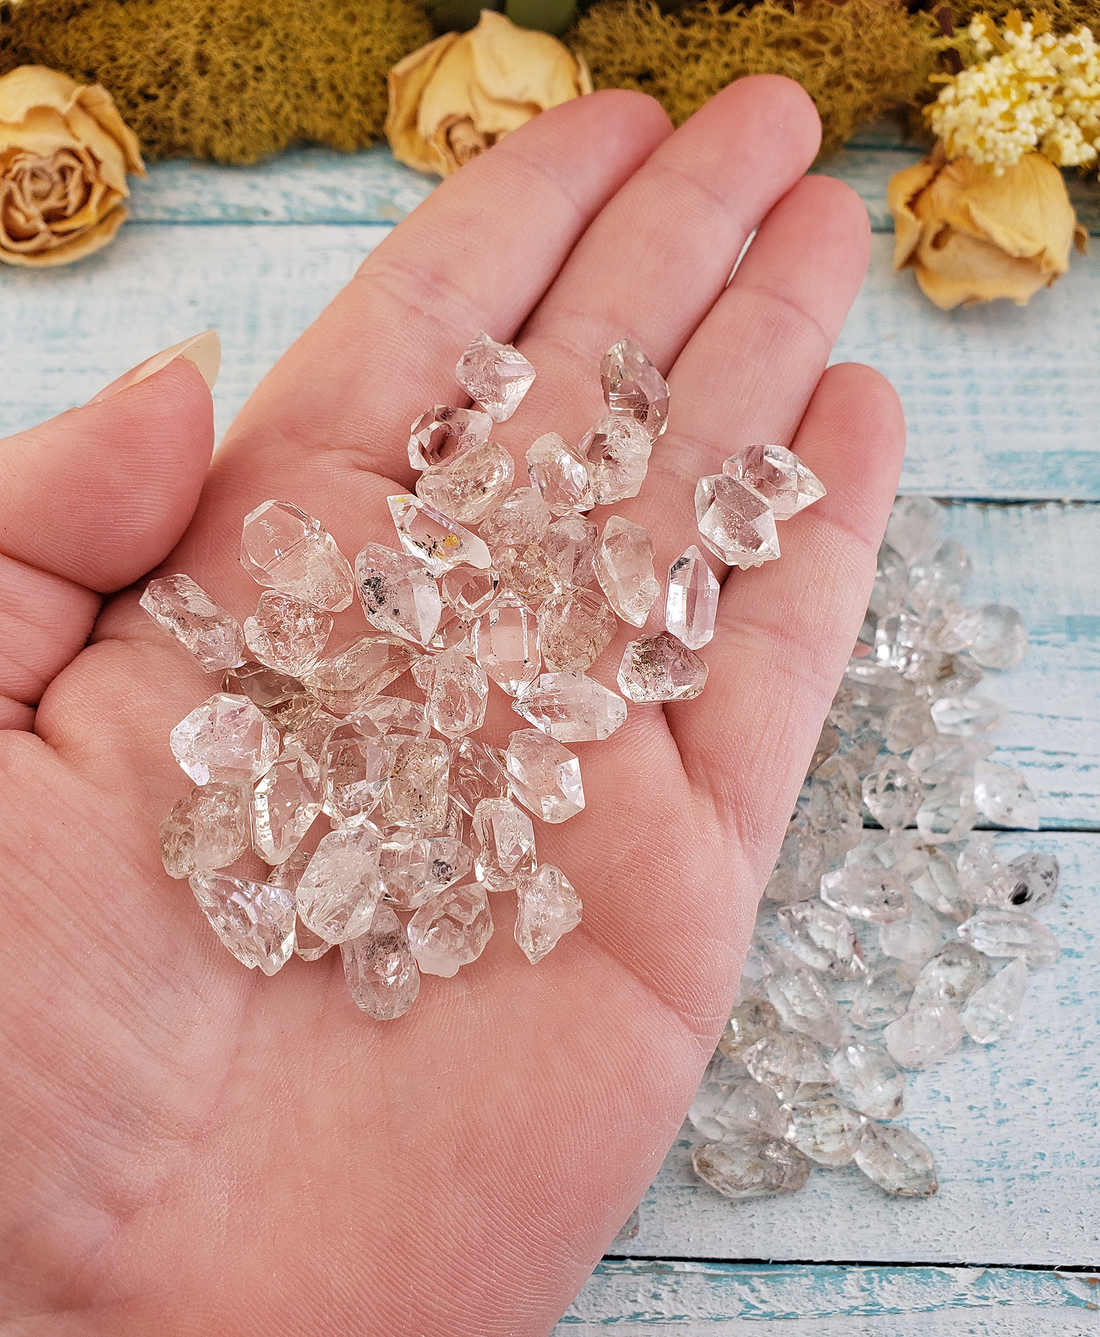 Herkimer Diamond Quartz Natural Crystal - Small One Stone